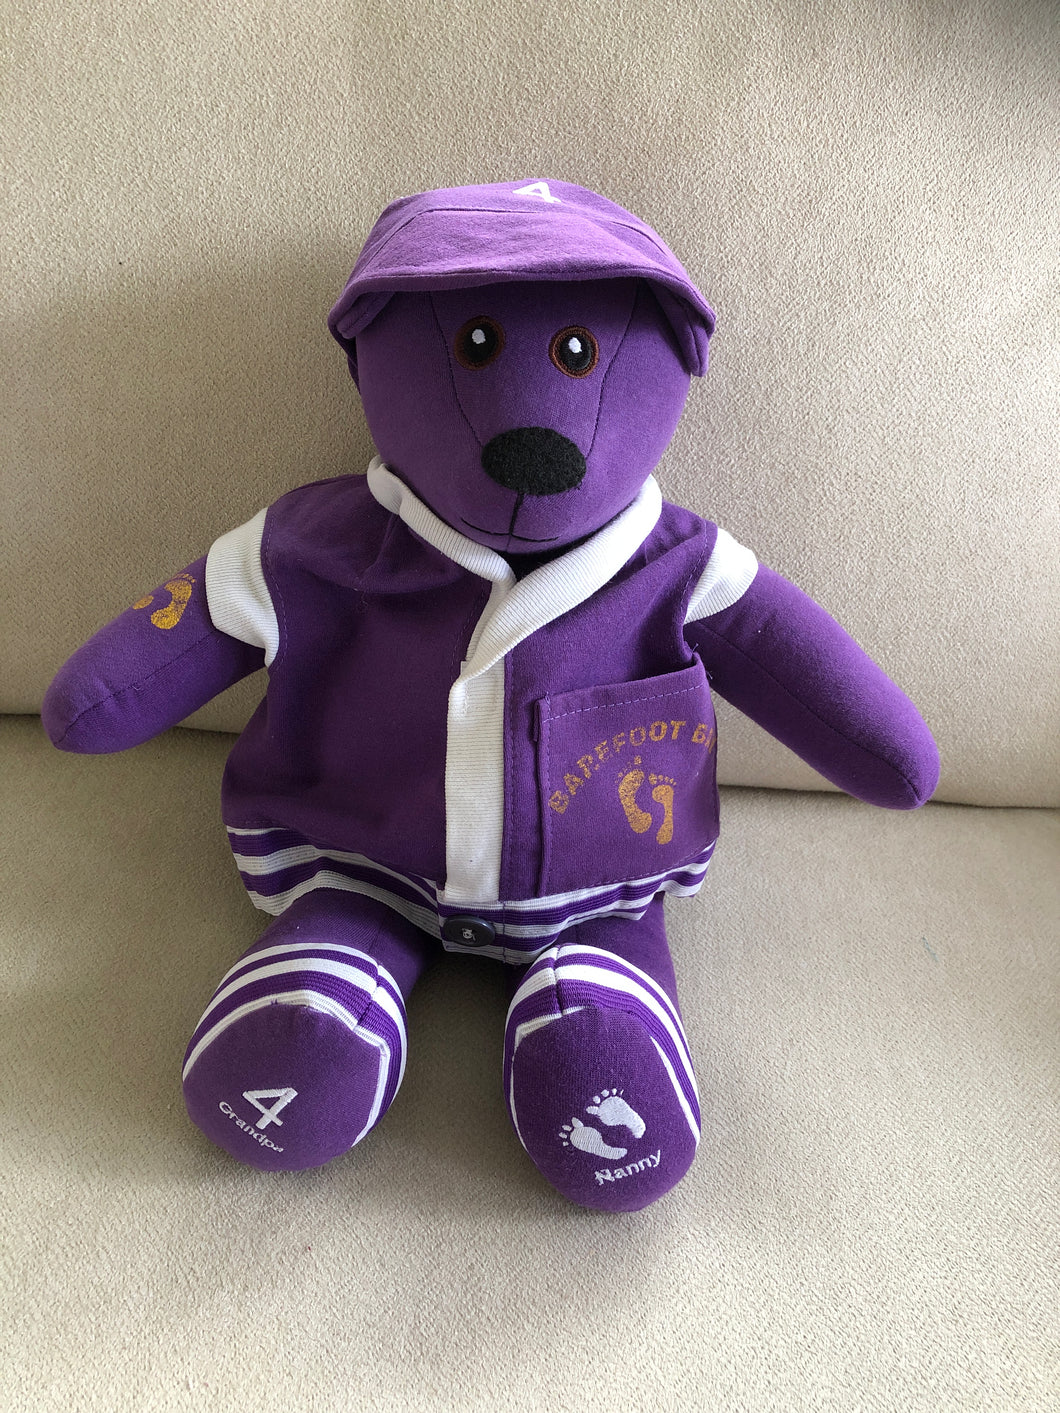 Memory Teddy Bears made from a baseball jersey